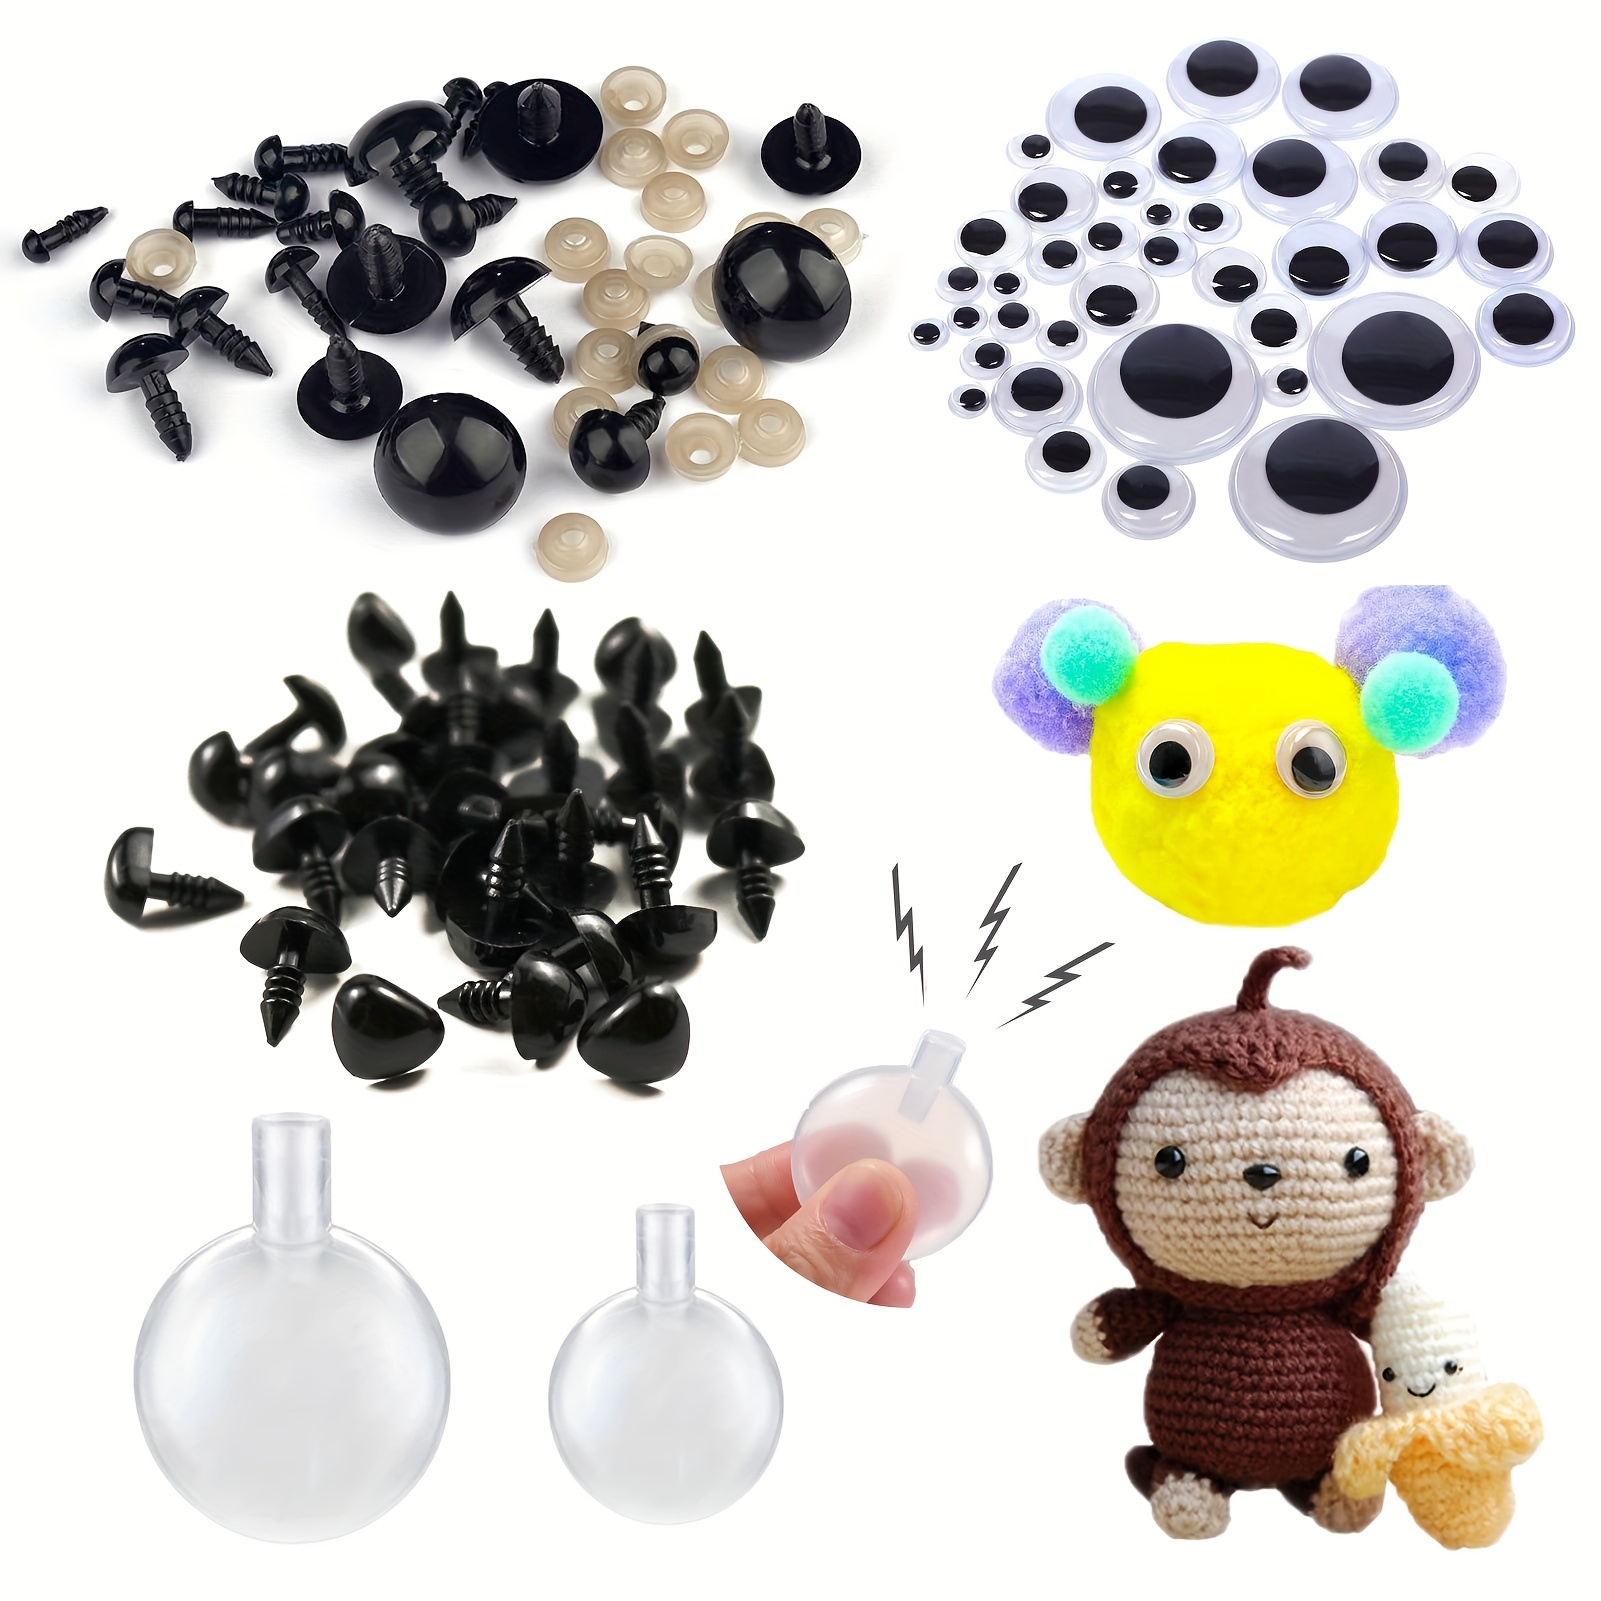 Amigurumi Eyes Safety Plastic Toys, Plastic Eyes Toy Supplies